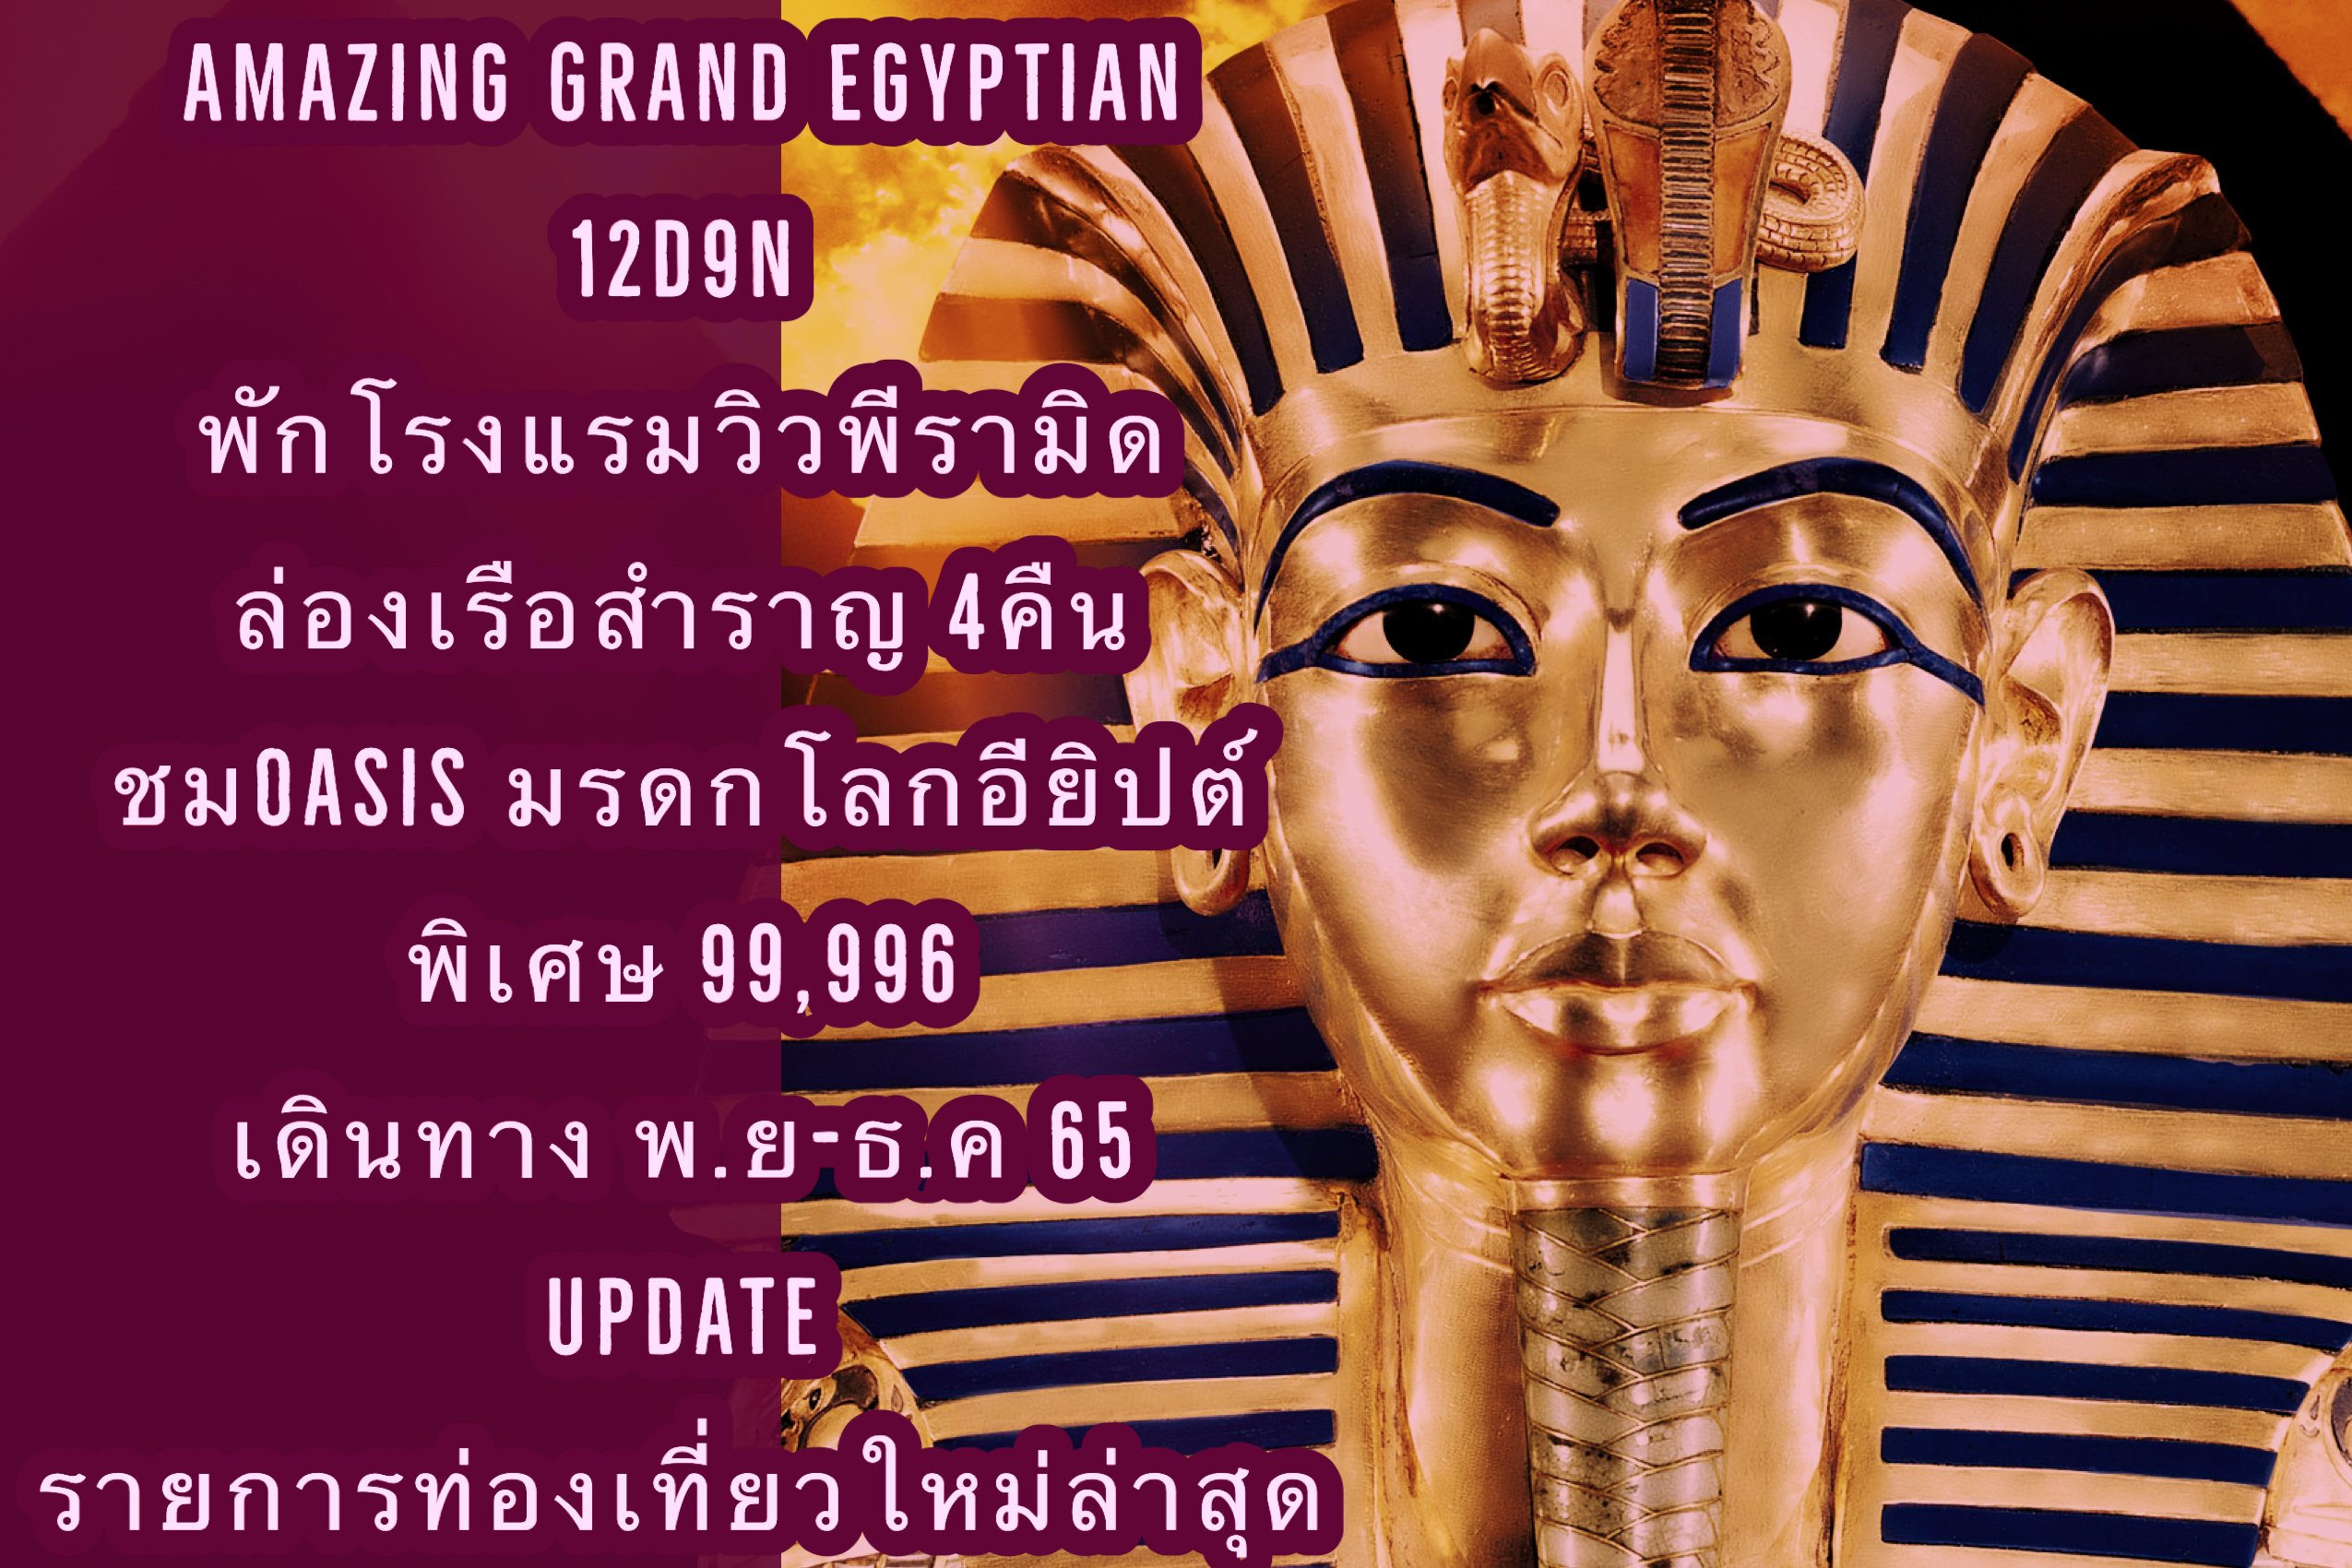 AMAZING GRAND EGYPTIAN 12D9N